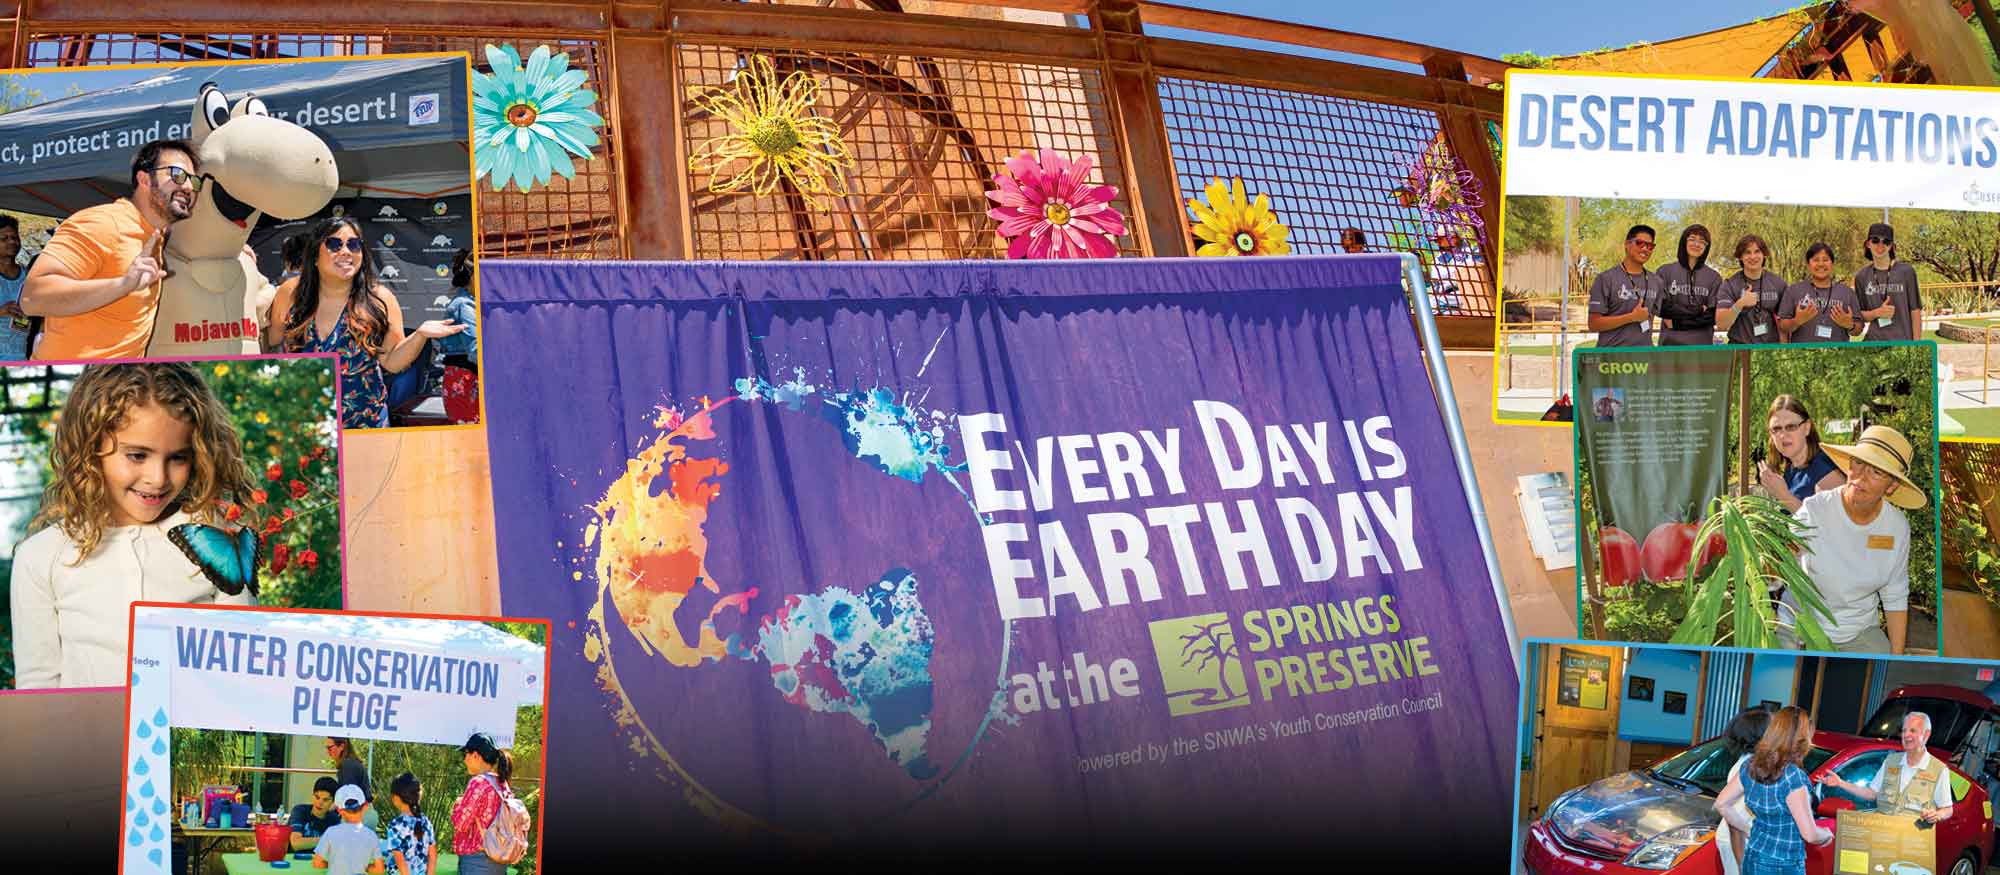 Earth Day Celebration